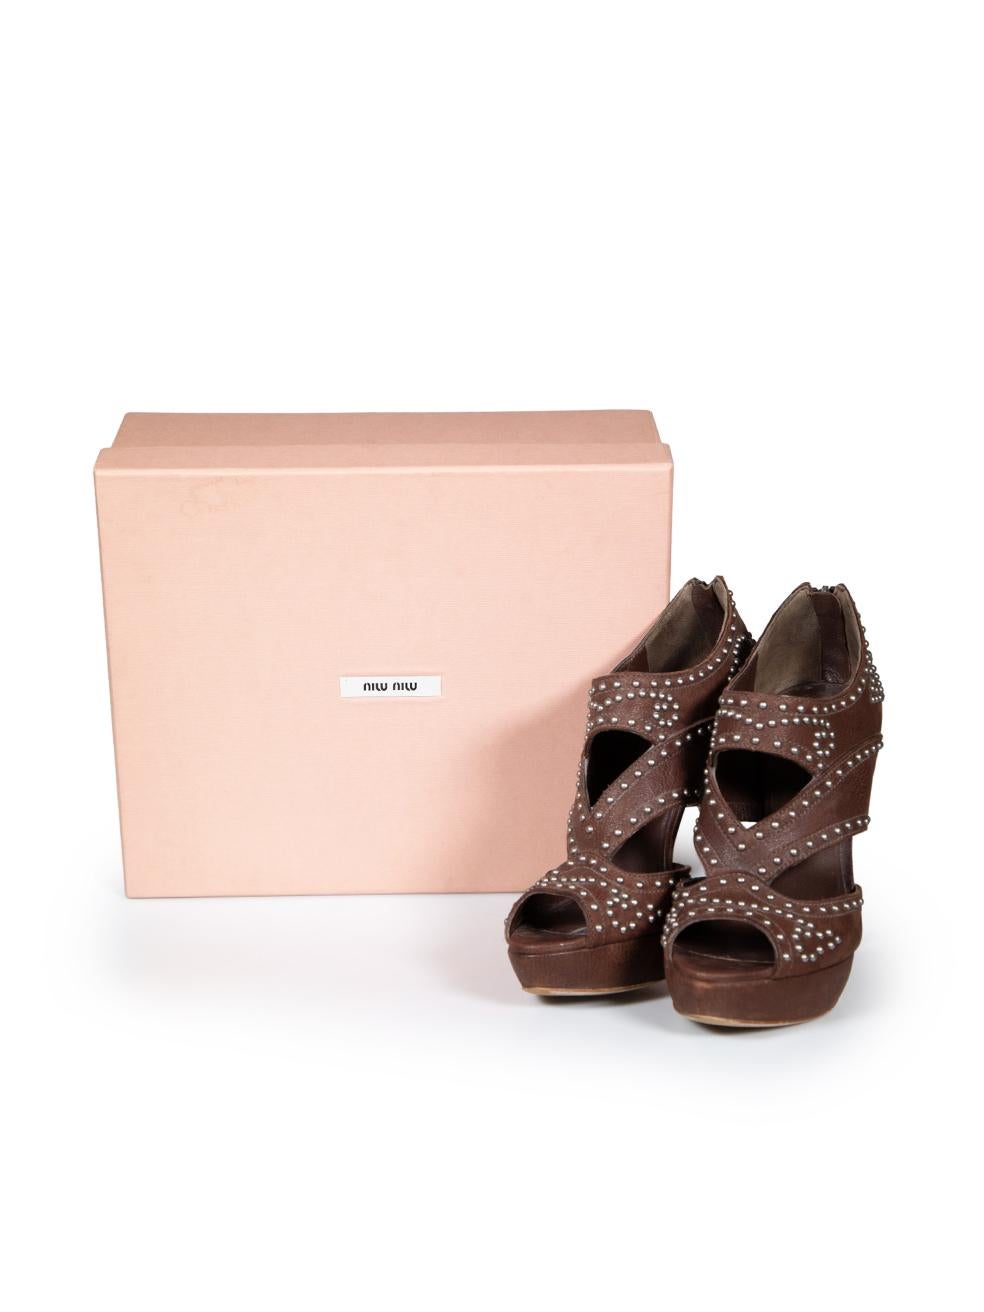 Miu Miu Brown Leather Studded Platform Sandals Size IT 40 For Sale 2